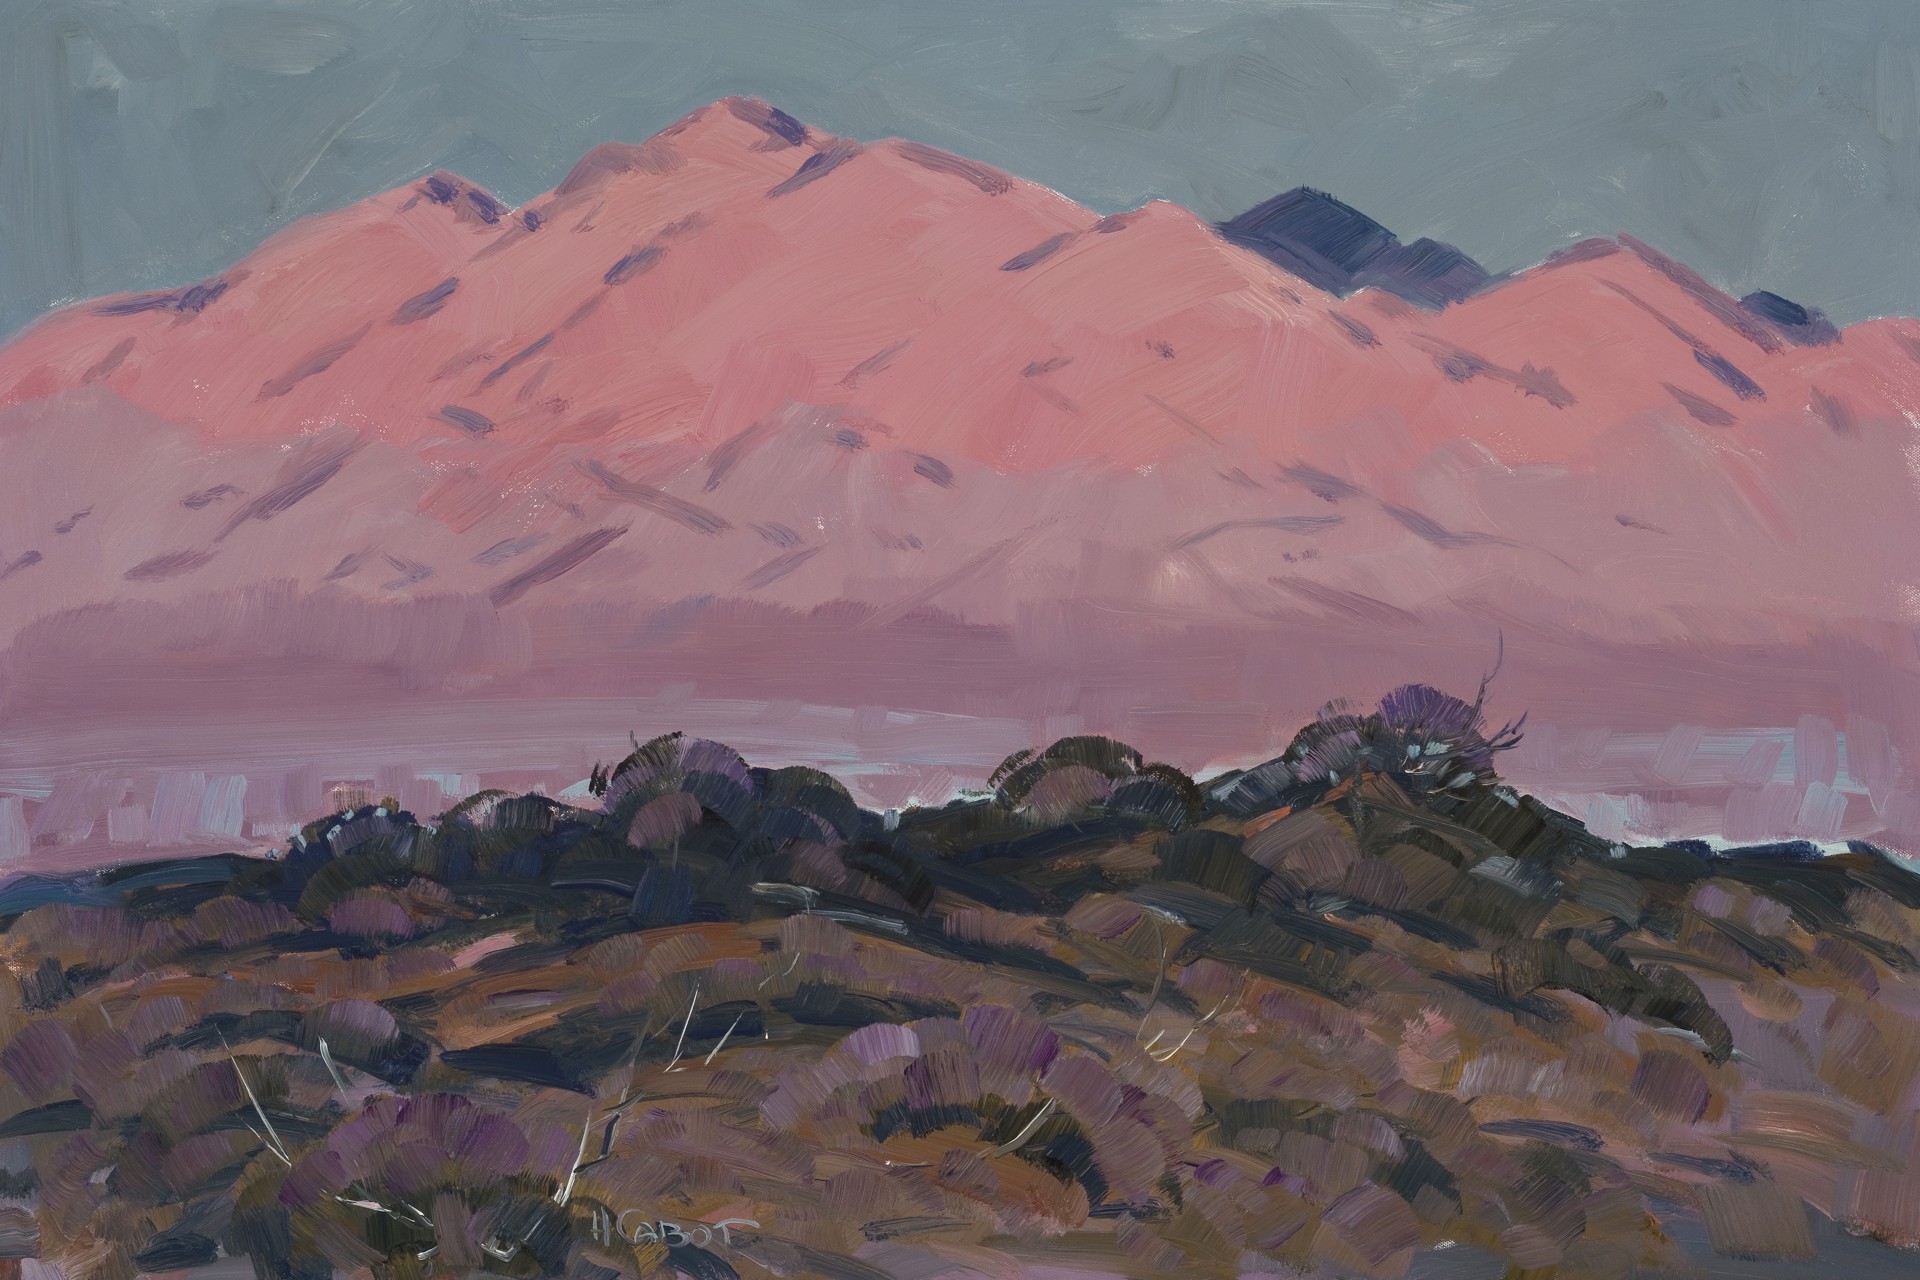 When the Mountains Get Pink by Originals Hugh Cabot